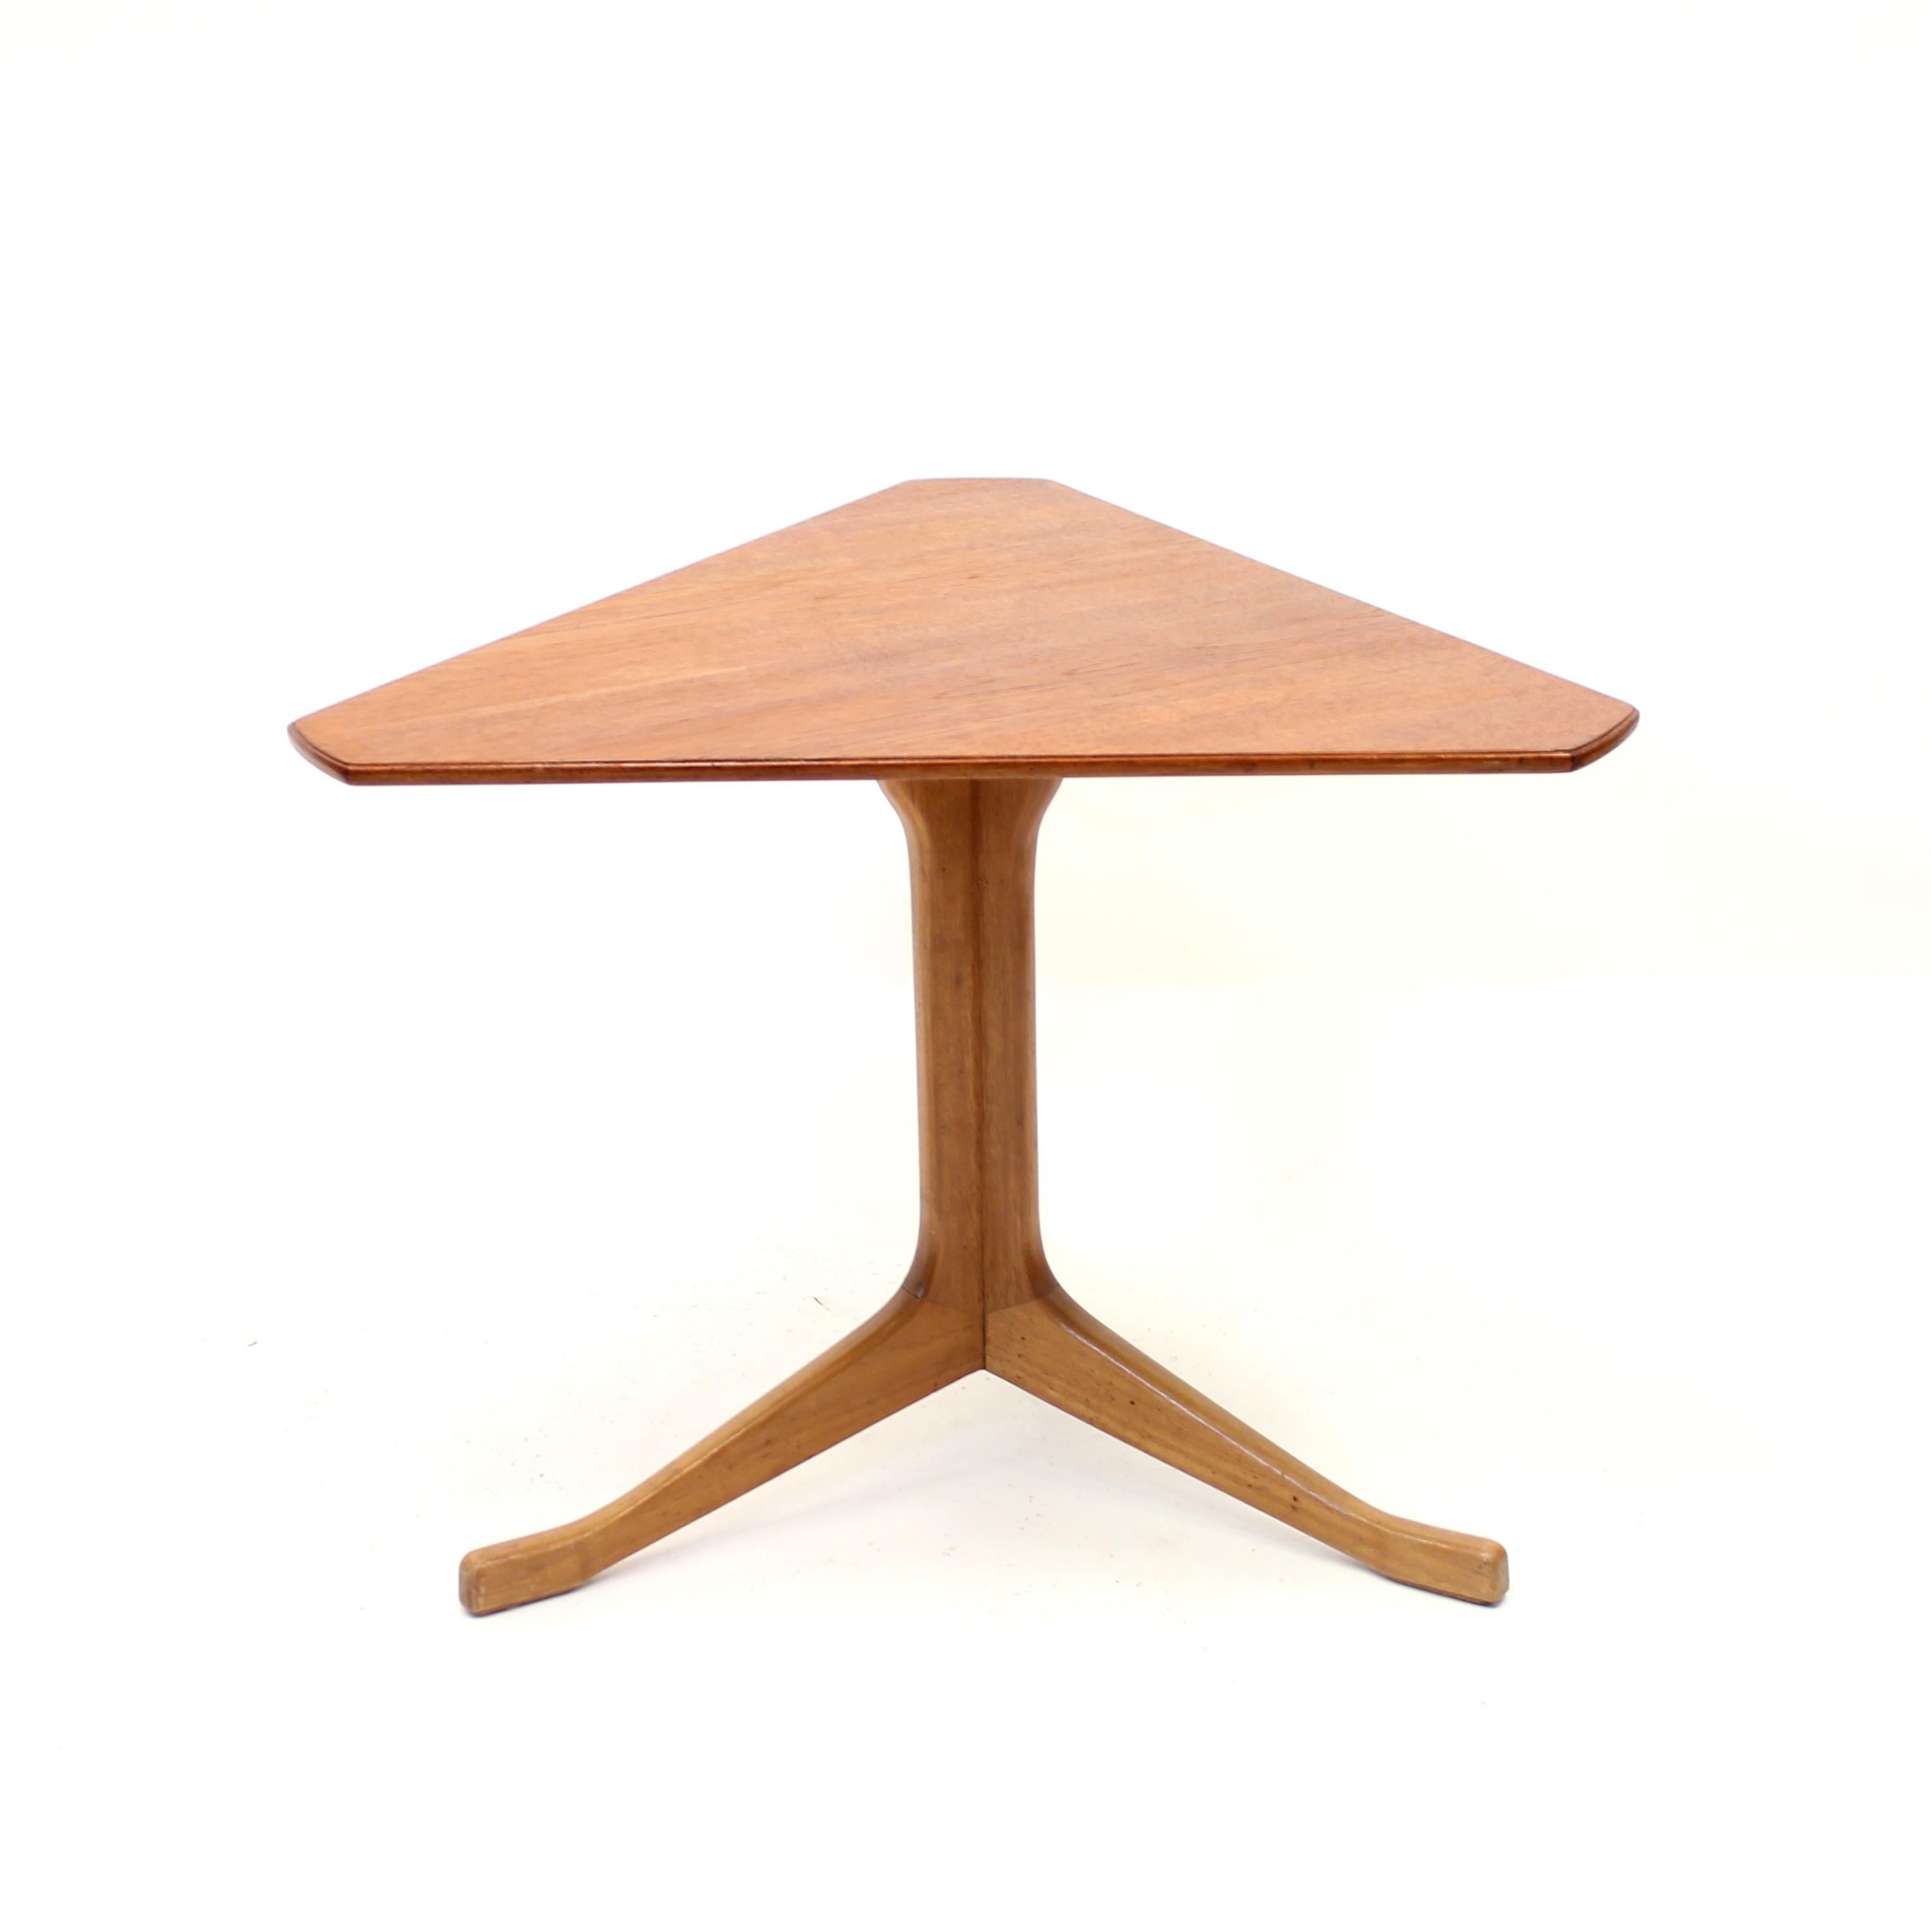 Swedish Scandinavian Triangular Teak Coffee Table, 1950s For Sale